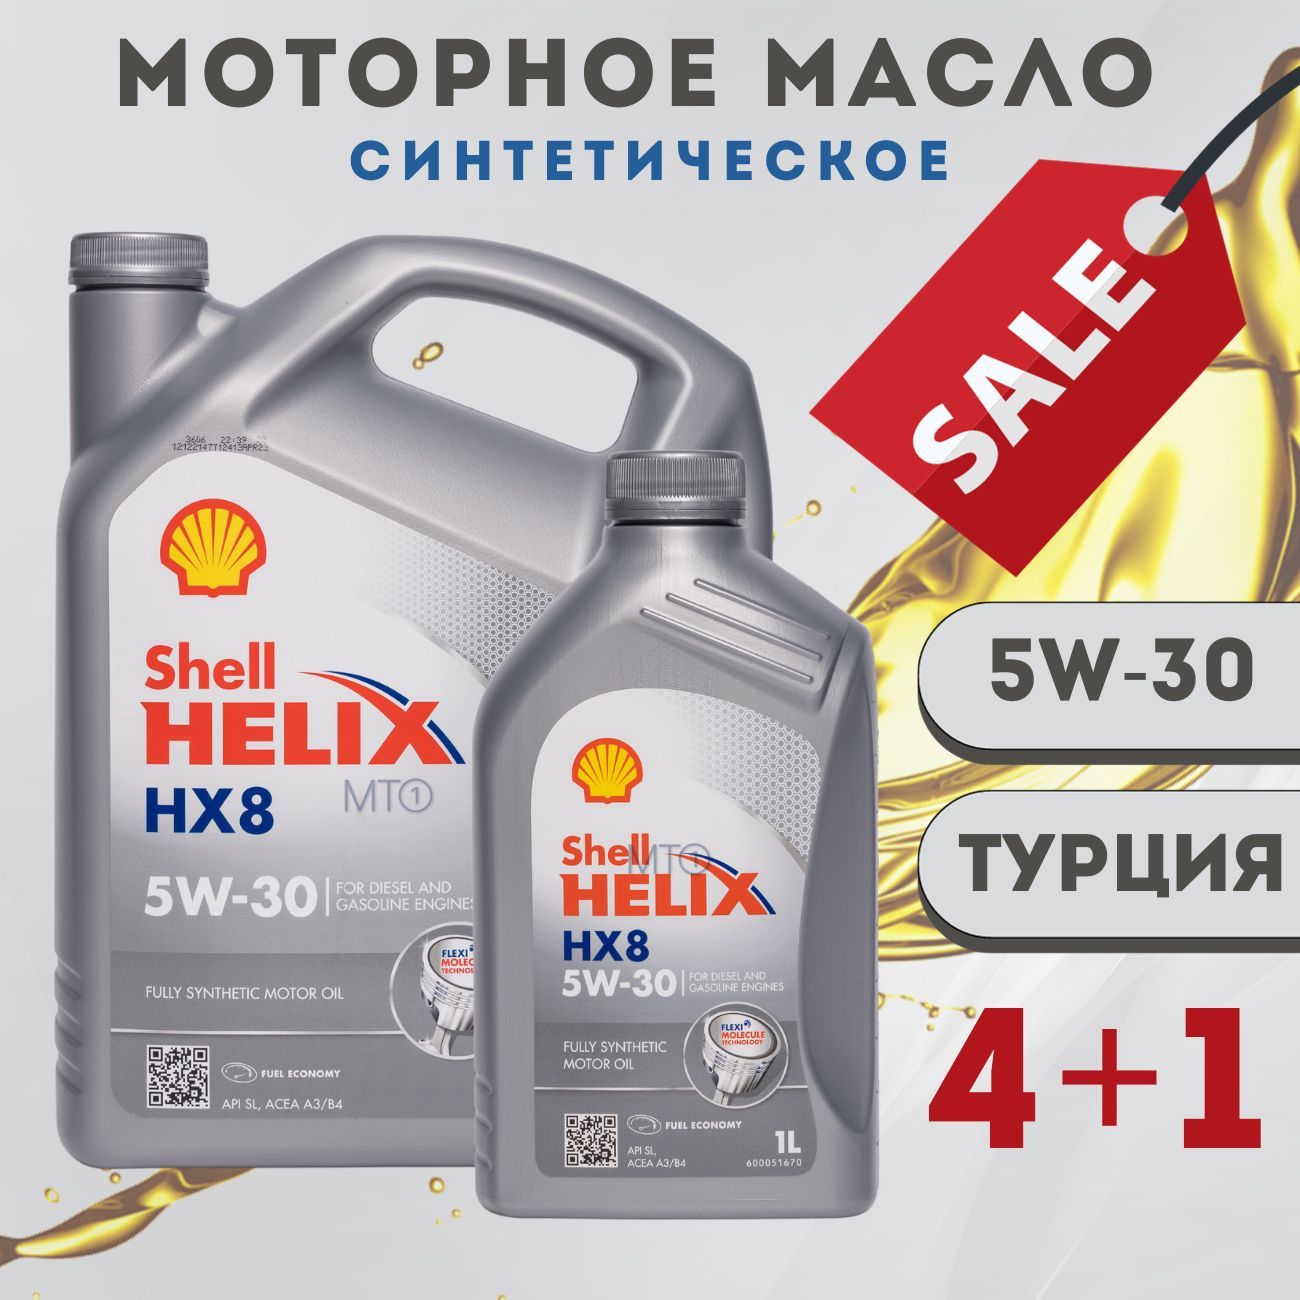 ShellМасломоторноеHelixHX85W-30Синтетическое5л